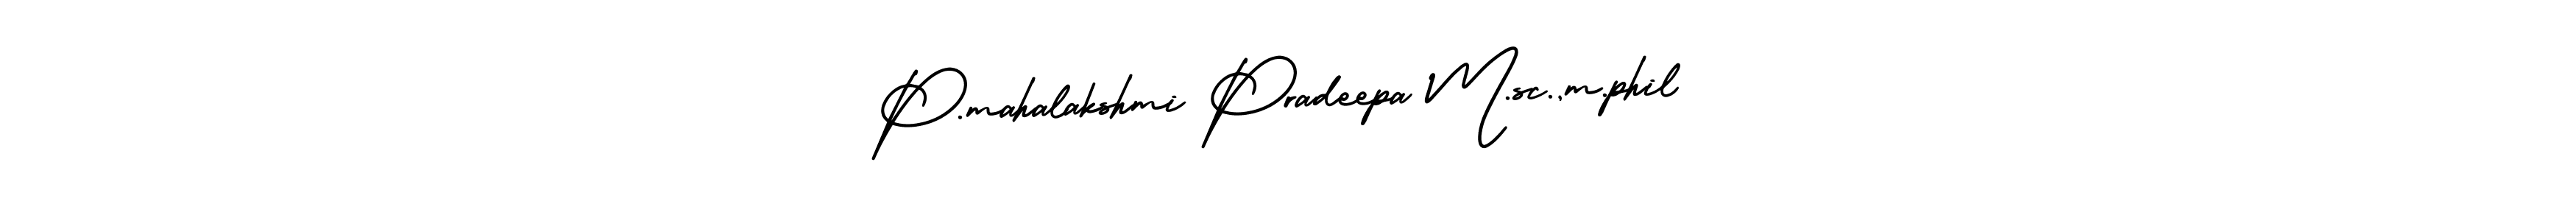 How to make P.mahalakshmi Pradeepa M.sc.,m.phil name signature. Use AmerikaSignatureDemo-Regular style for creating short signs online. This is the latest handwritten sign. P.mahalakshmi Pradeepa M.sc.,m.phil signature style 3 images and pictures png